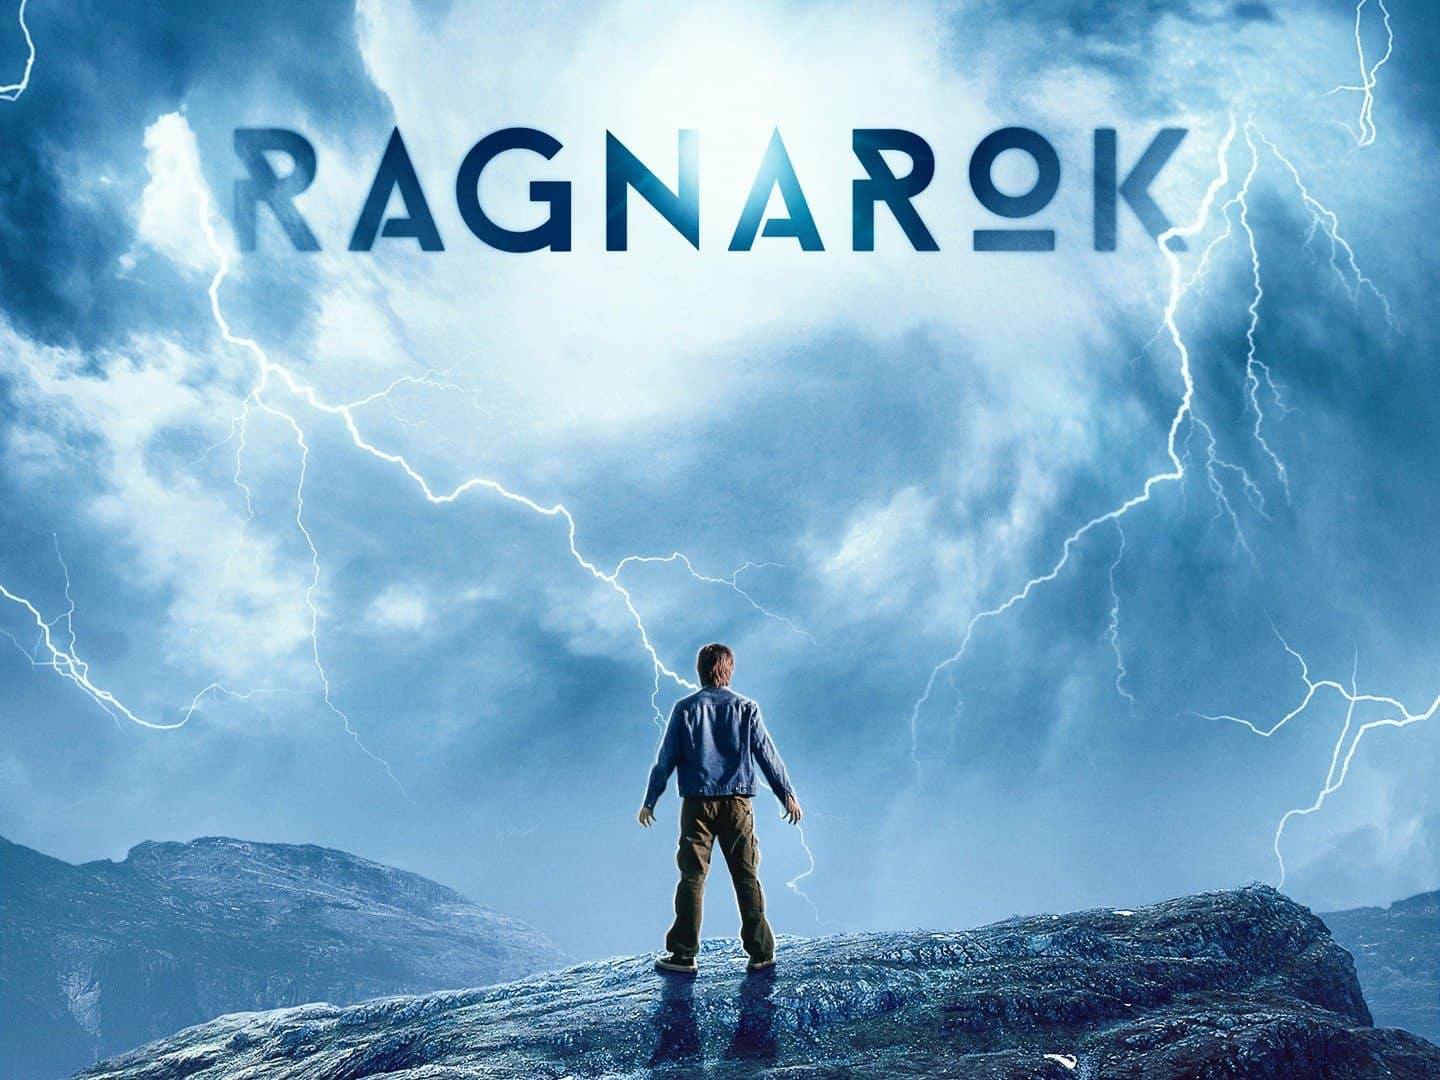 Ragnarok season 3 ending explained - will there be a season 4?